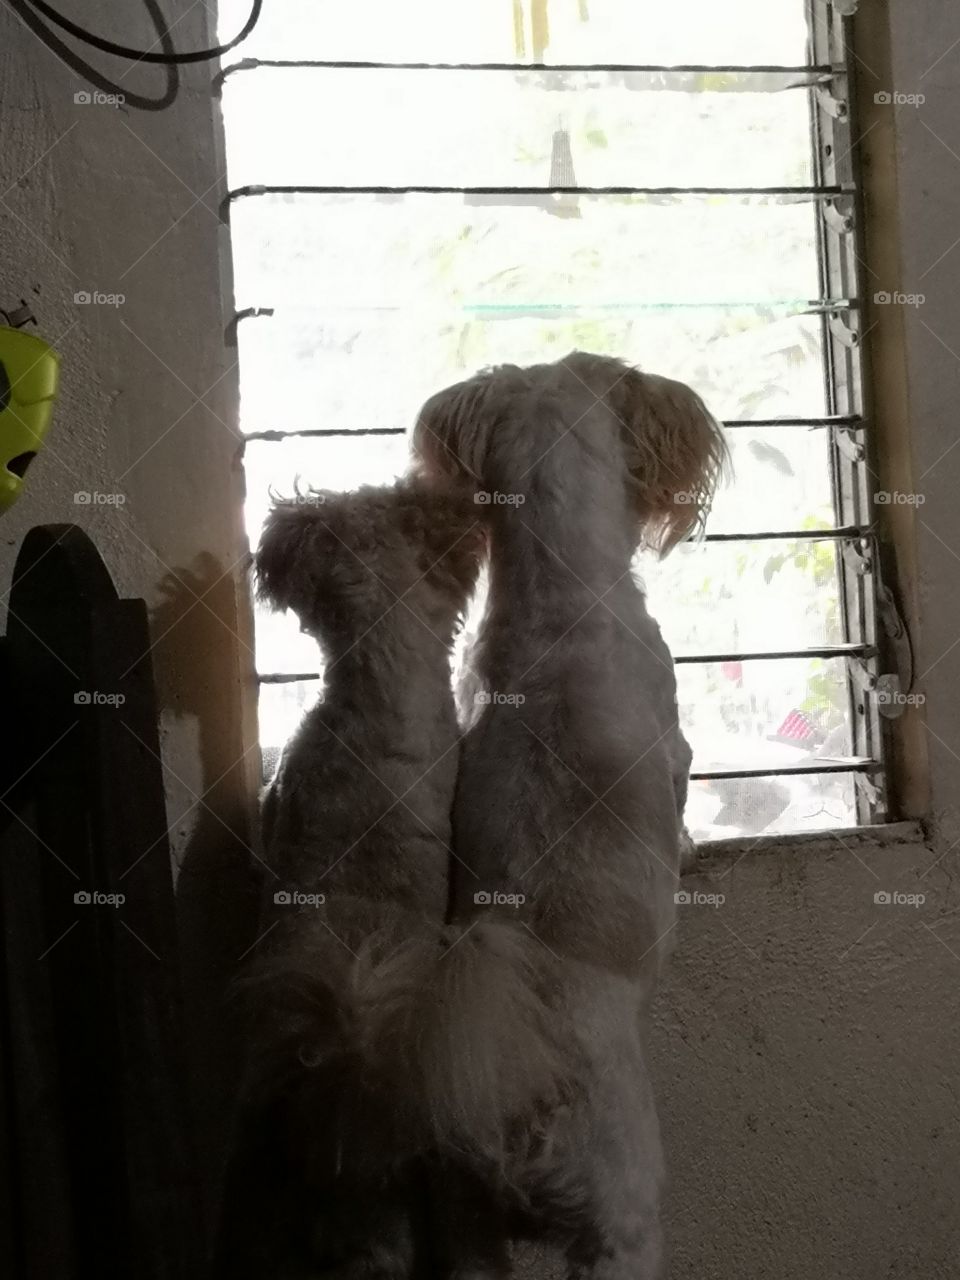 2 dogs on a window